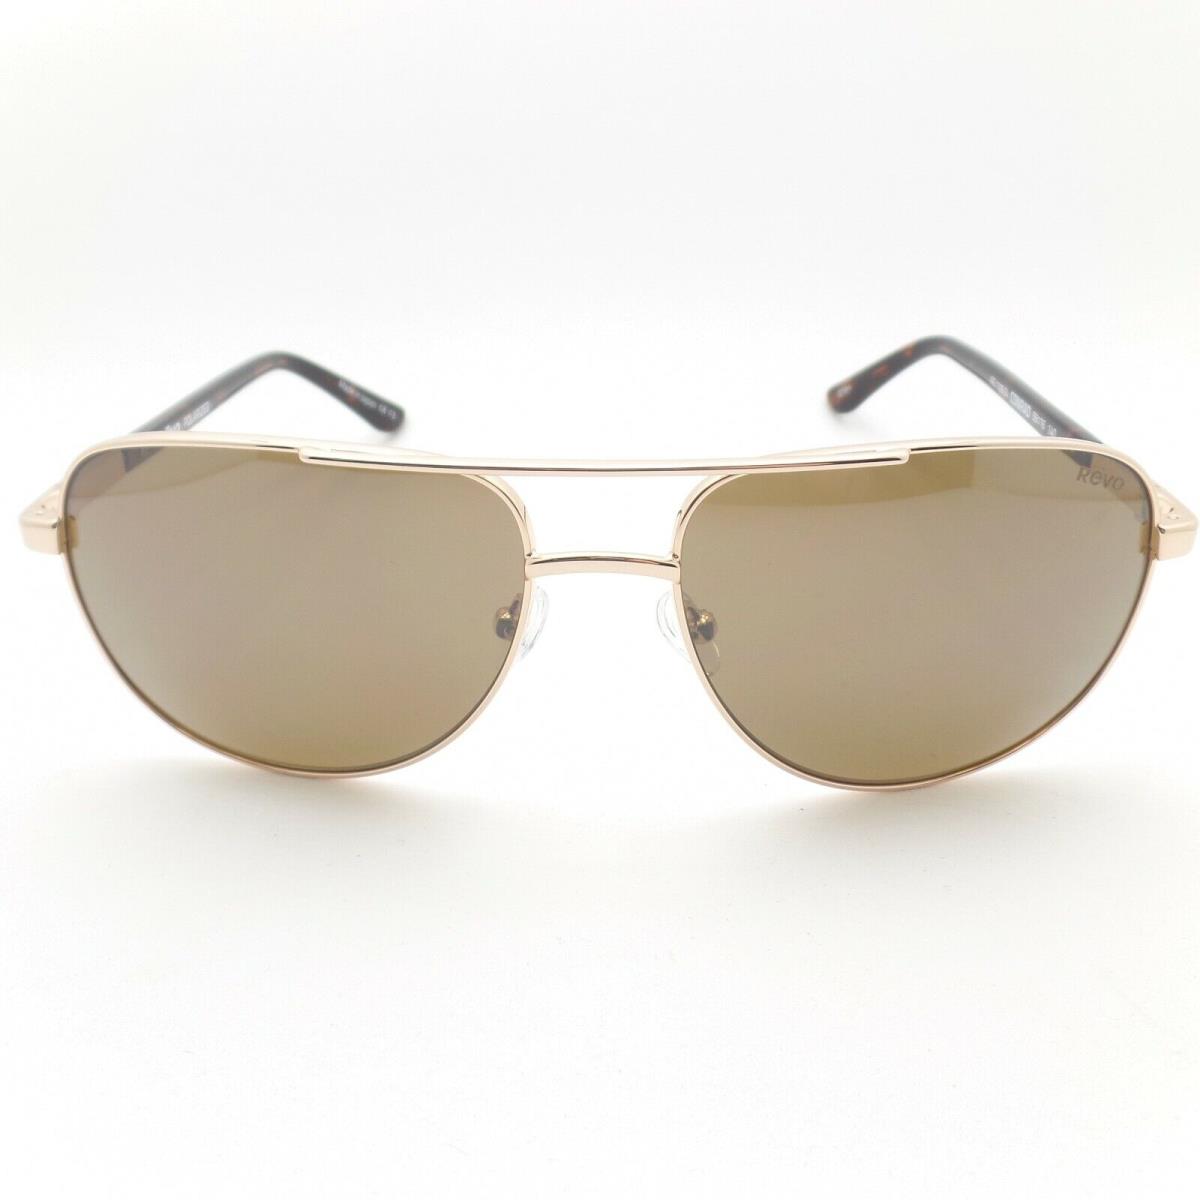 Revo sunglasses  - Gold Tortoise , Gold Tortoise Frame